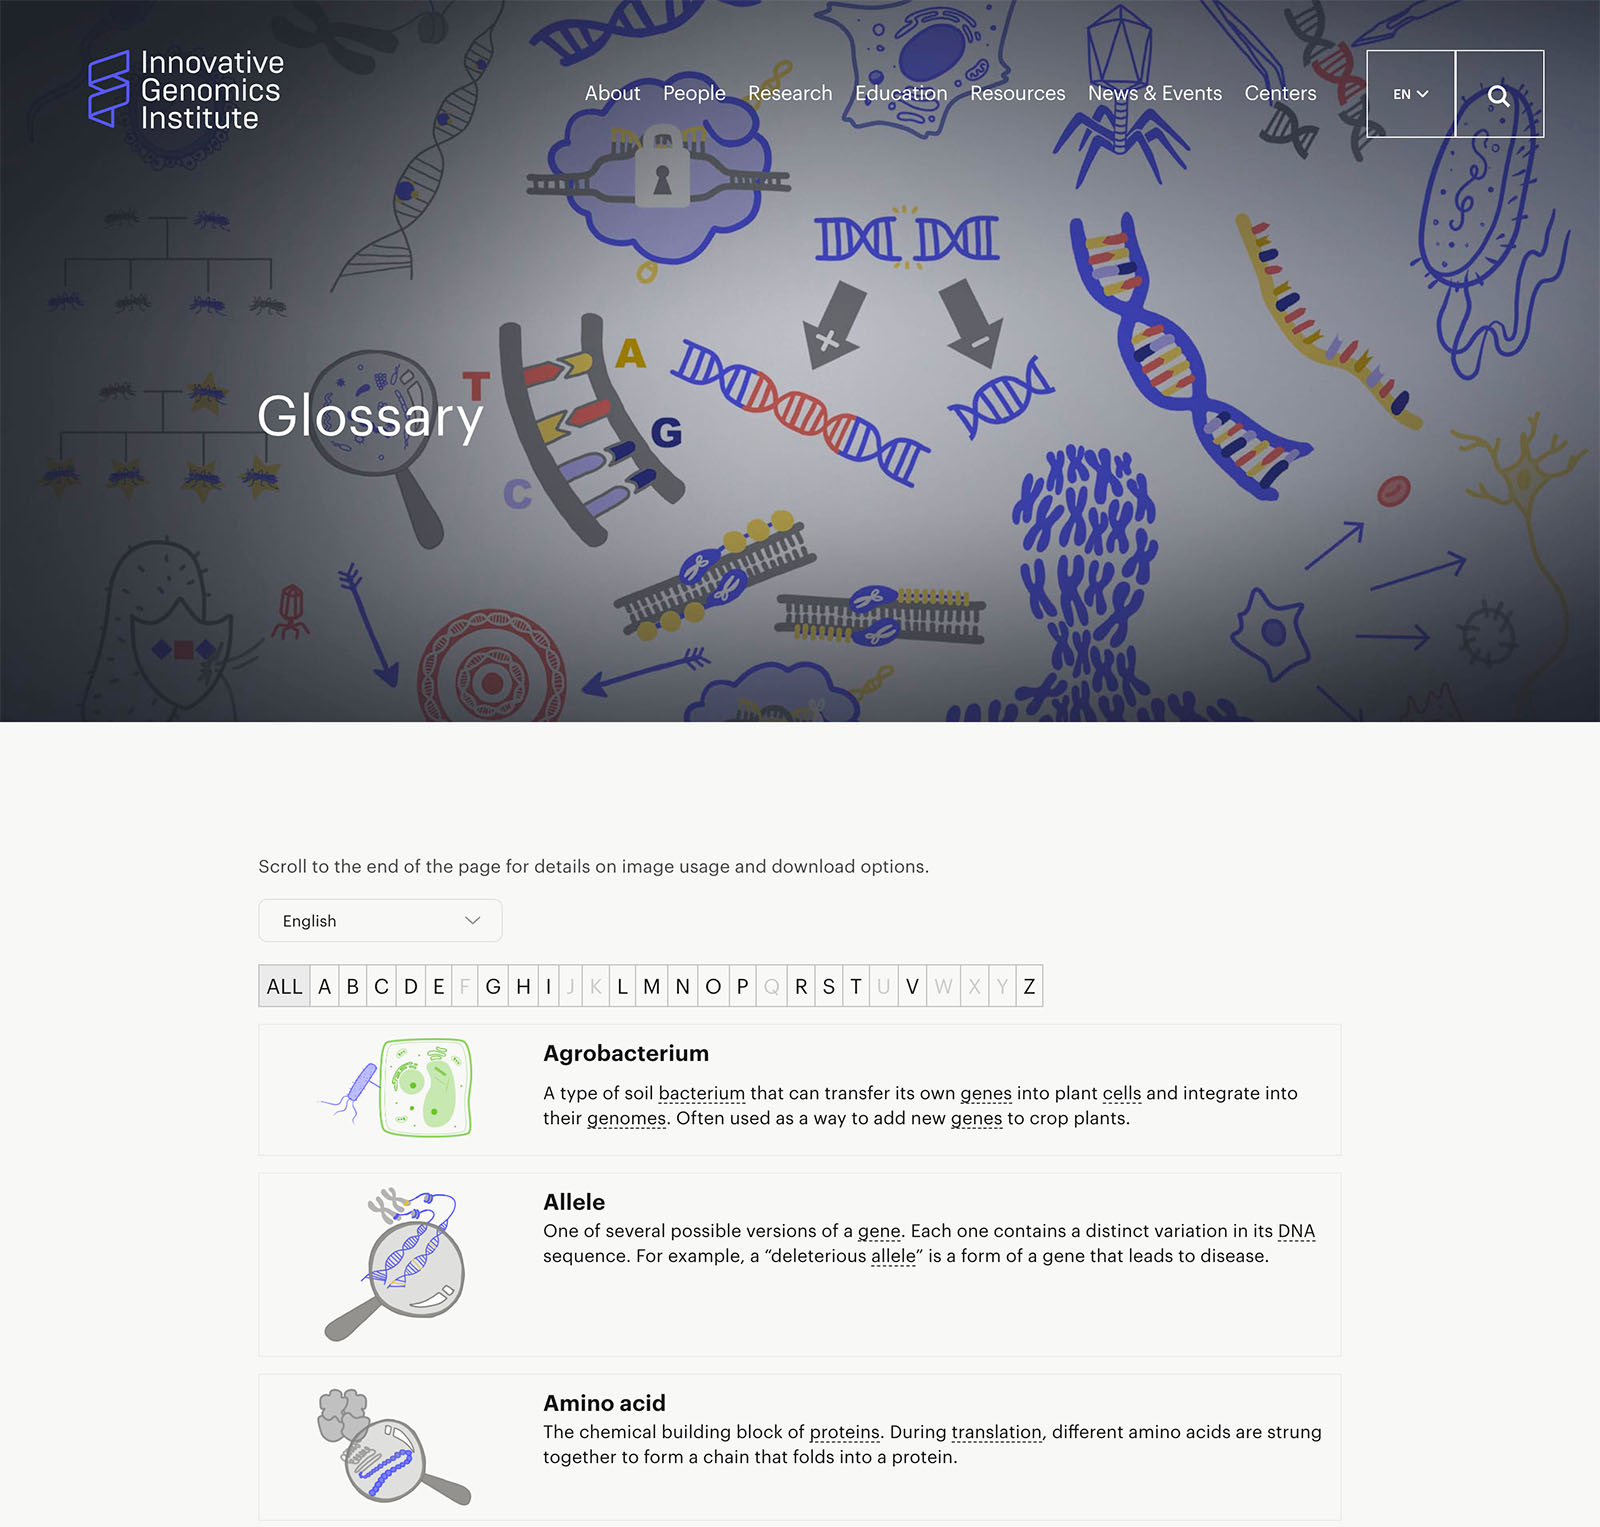 Screen capture of innovative genomics glossary website